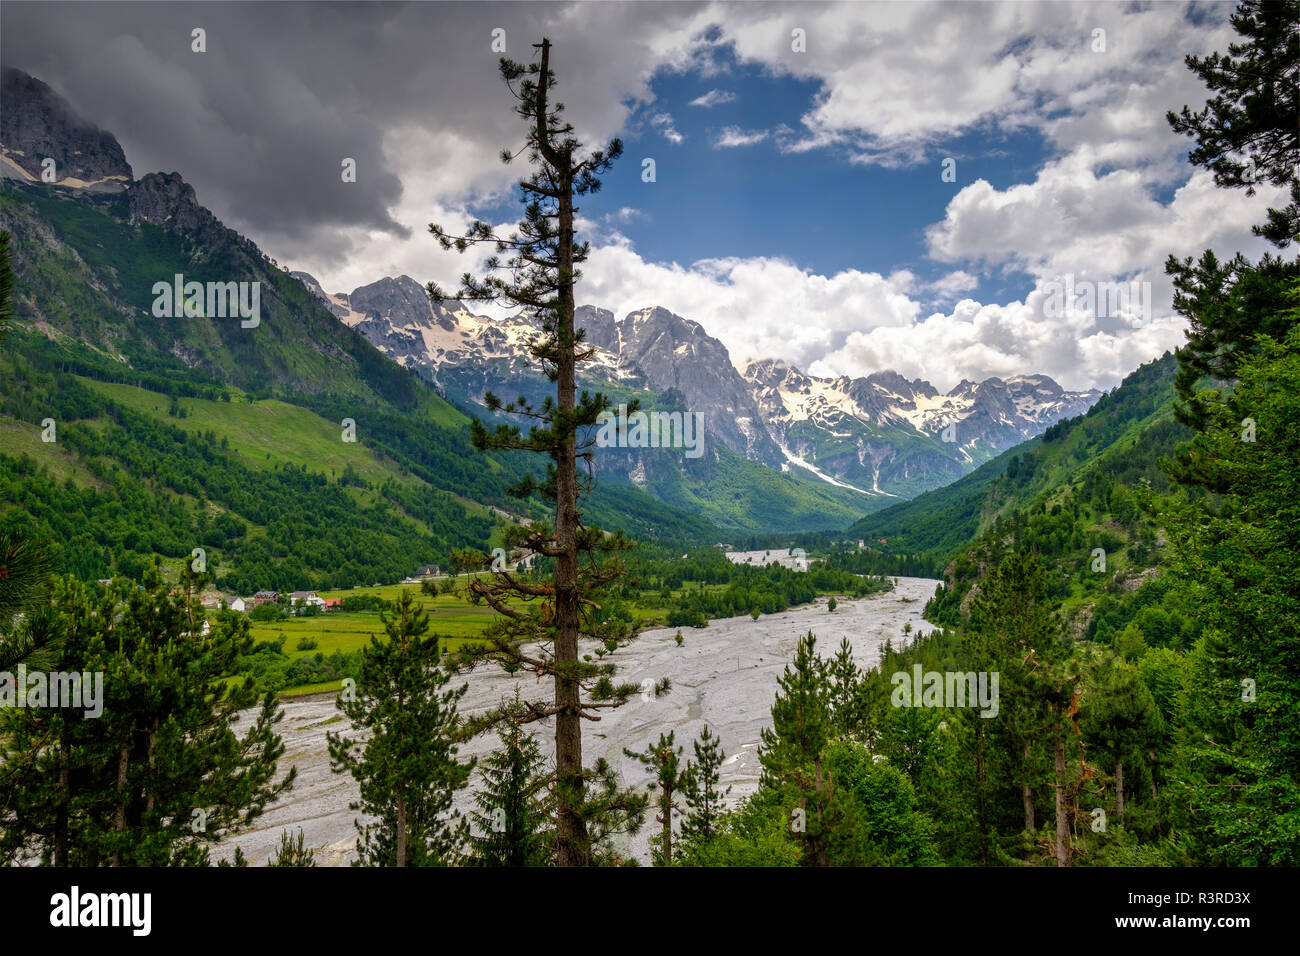 Albania, Kukes County, Alpi Albanesi, Valbona National Park, Valbona Valle, Valbona river Foto Stock